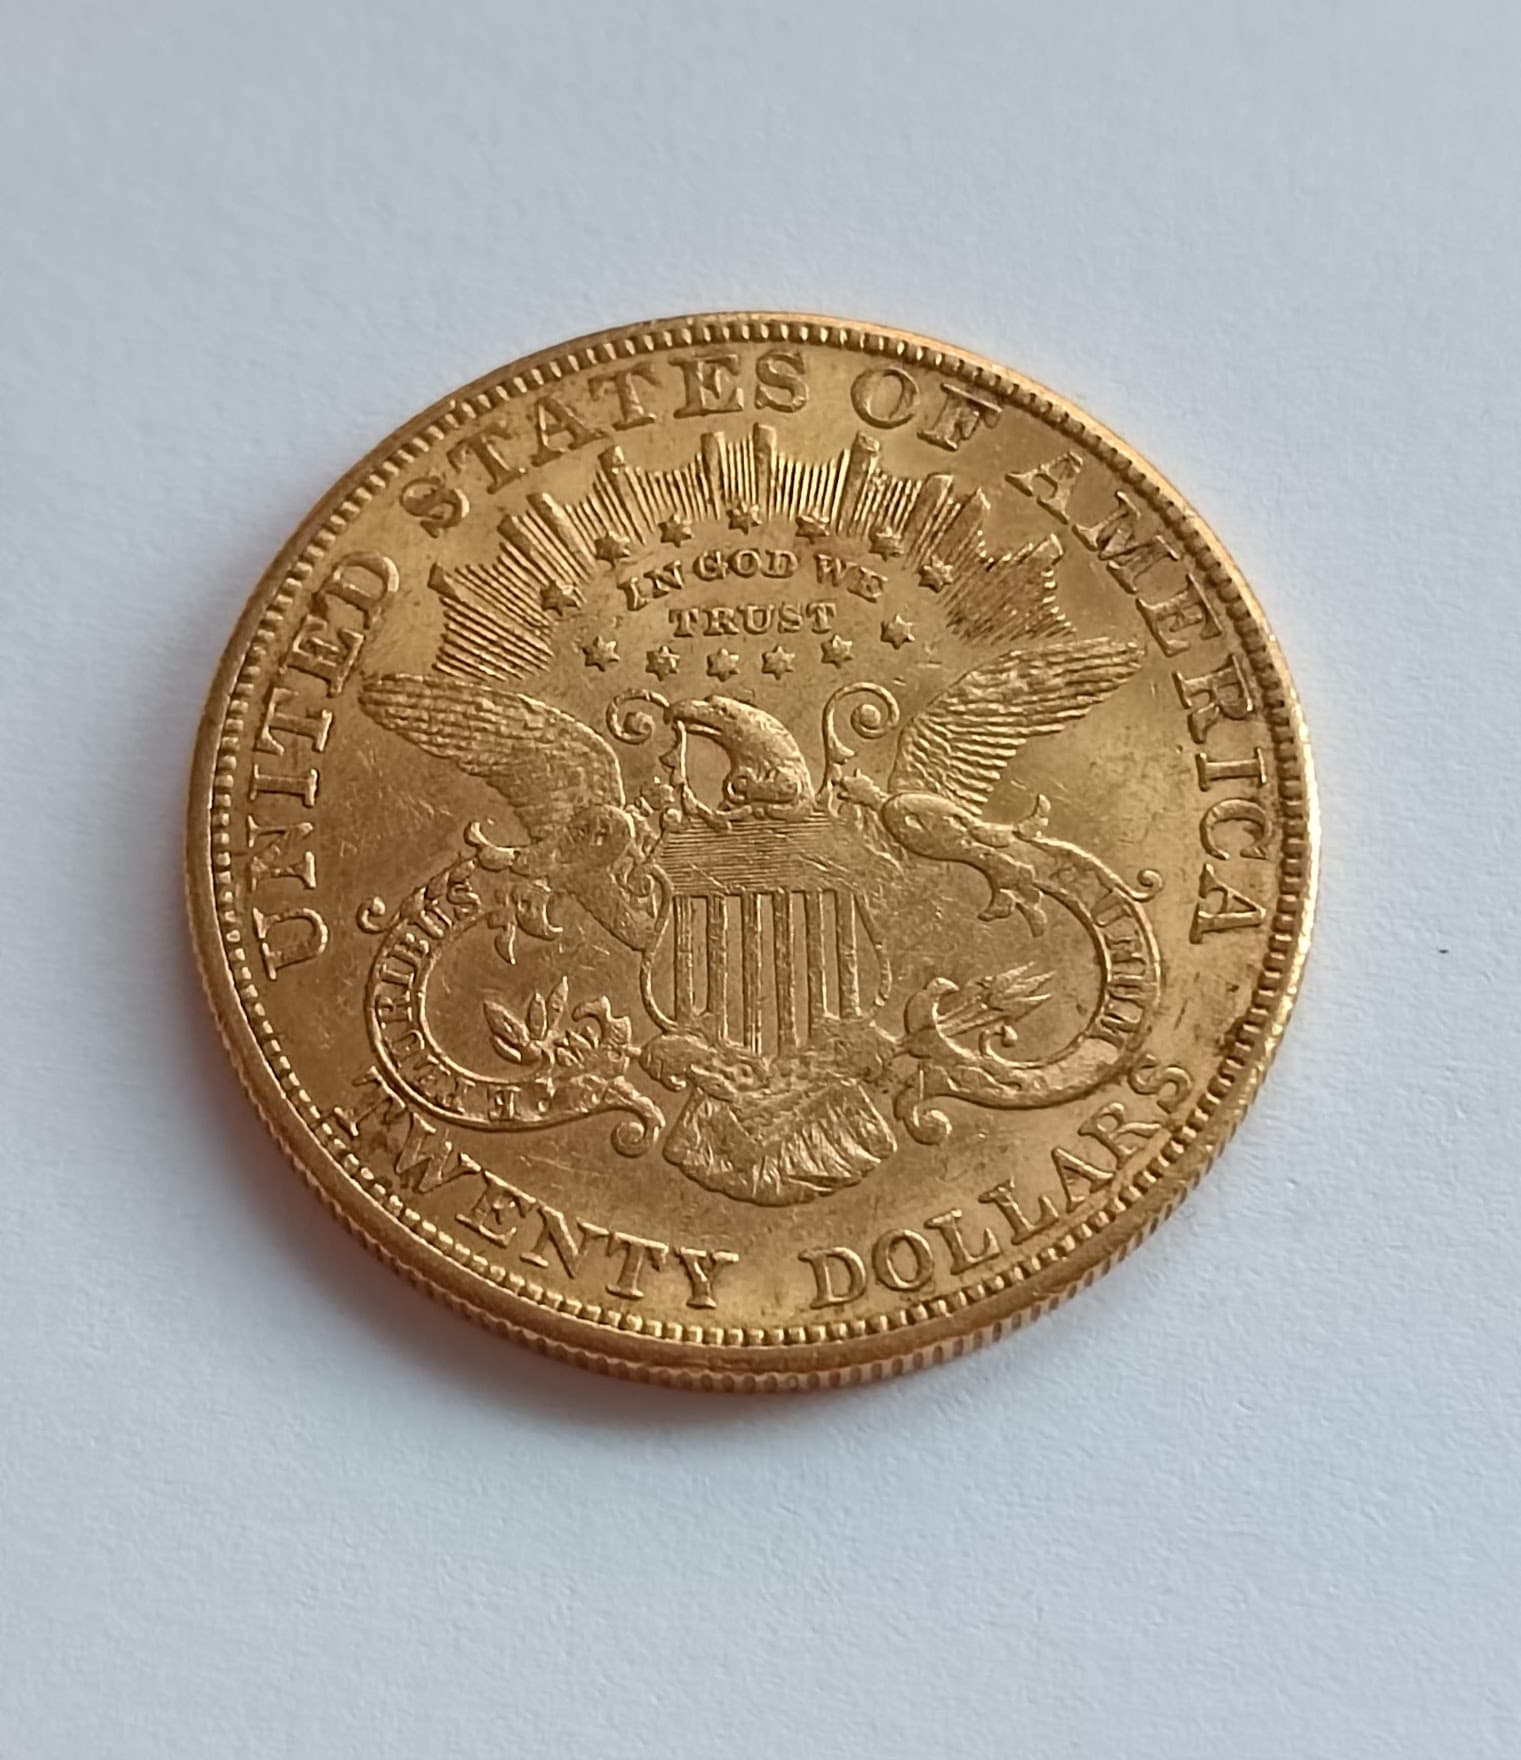 1904 $20 Liberty